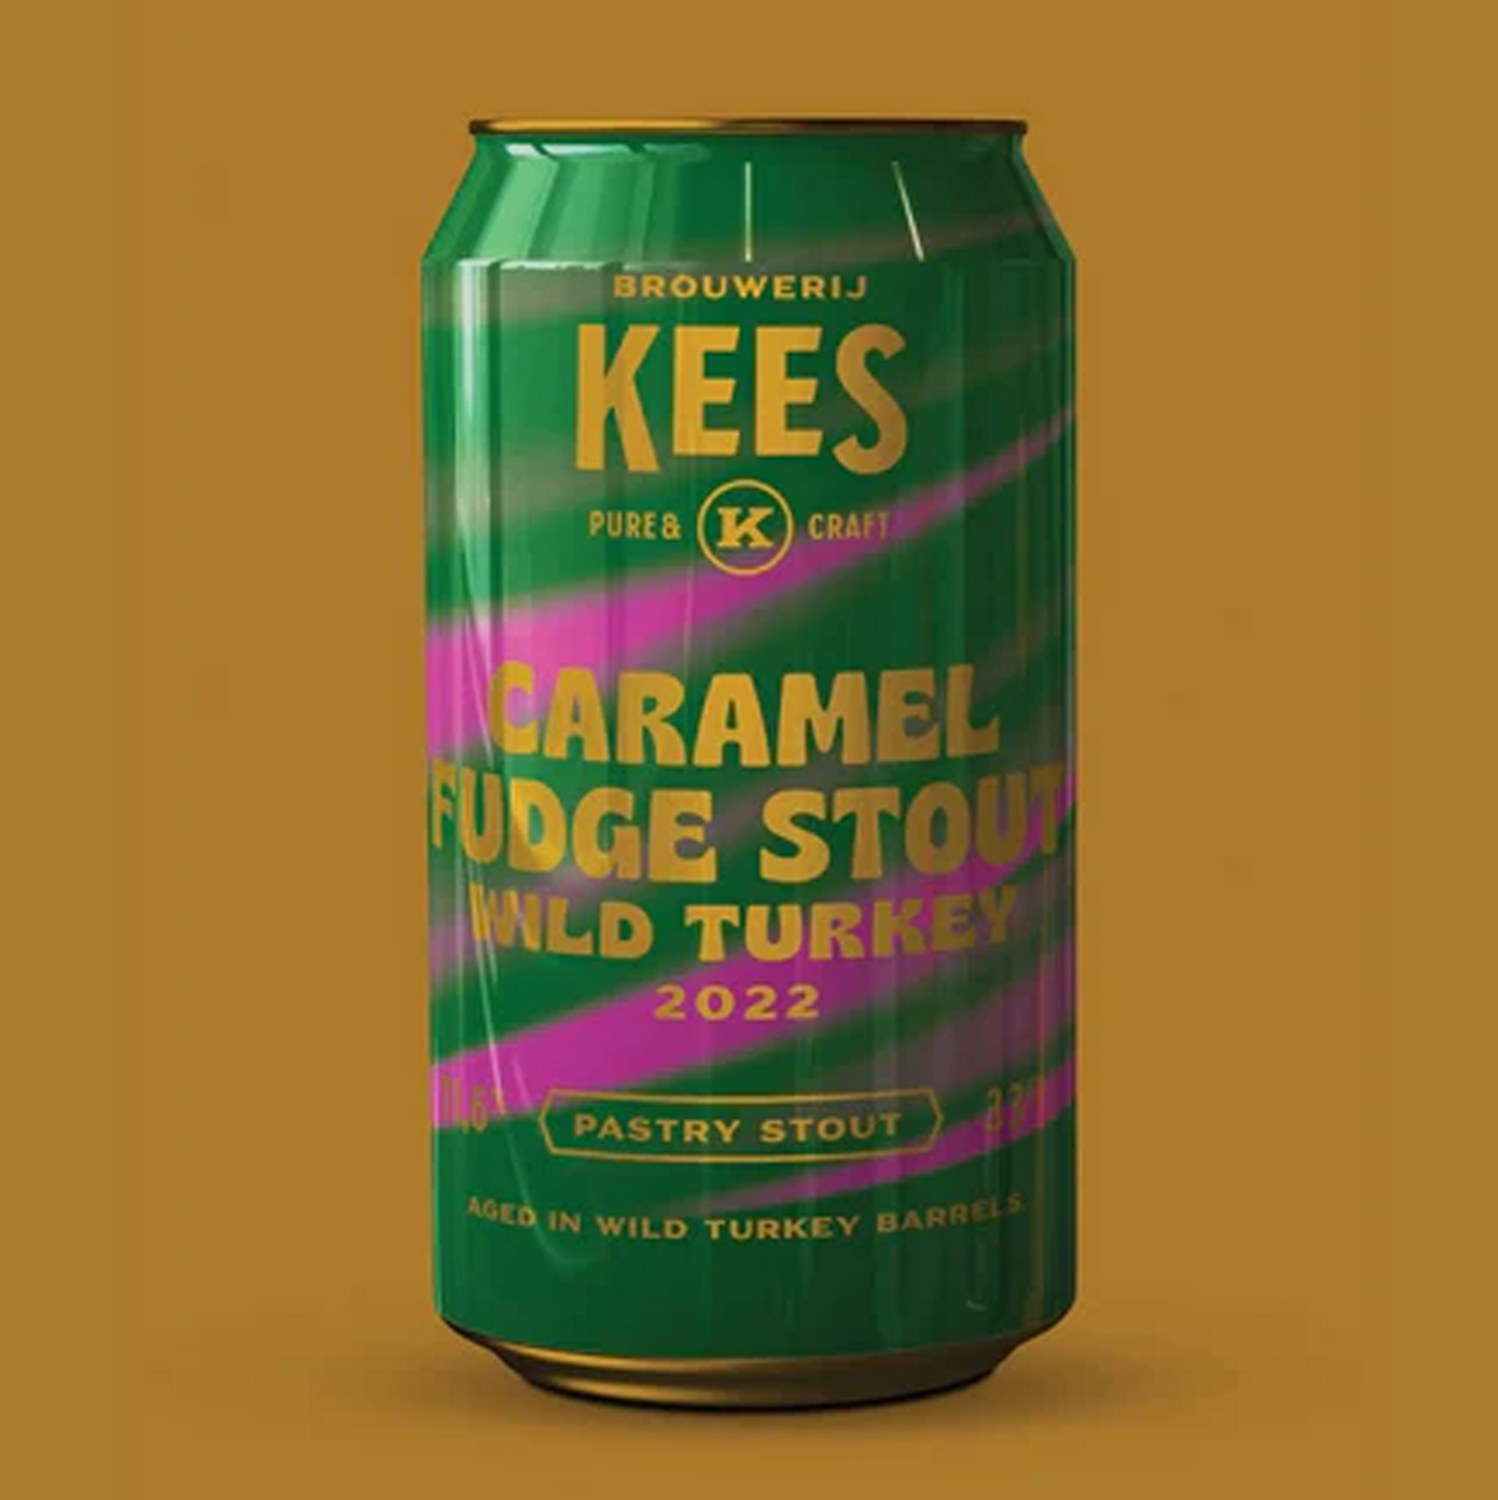 Kees Caramel Fudge Stout Wild Turkey 2022 Edition Imperial Stout